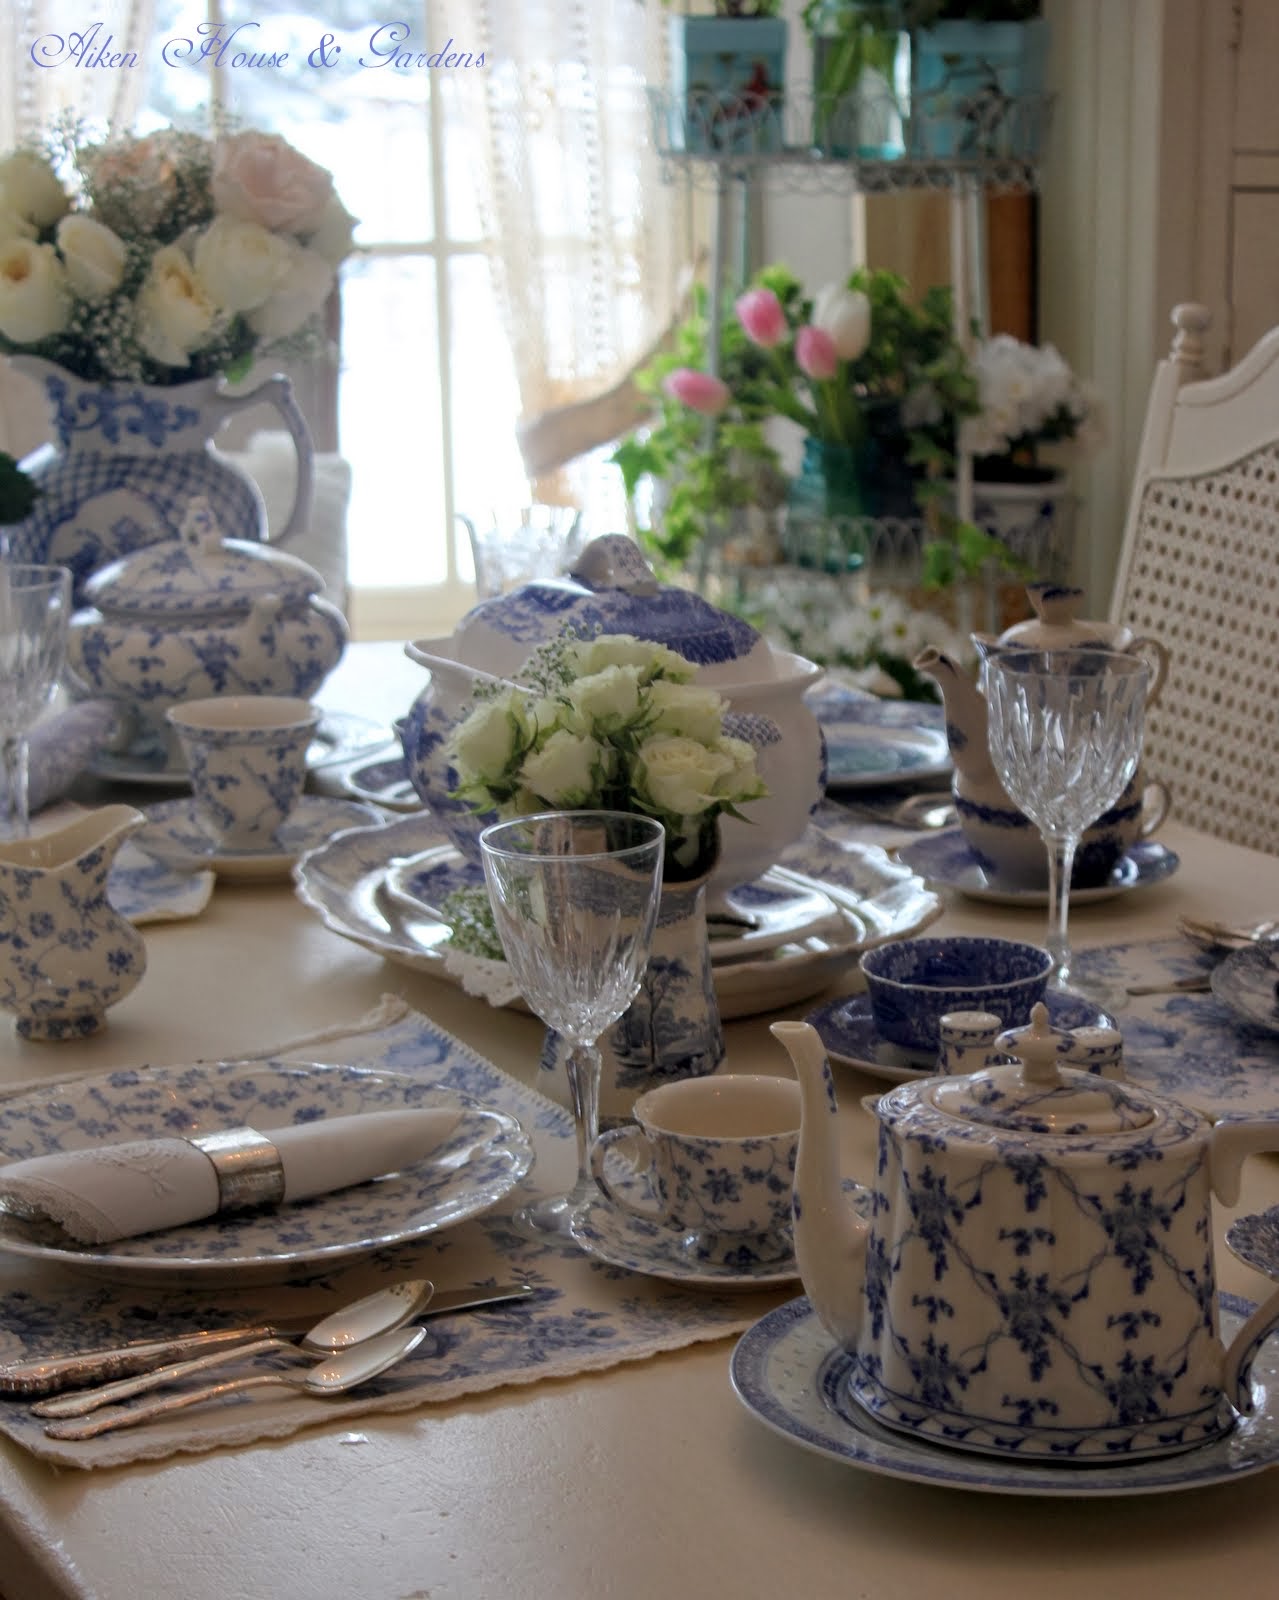 Aiken House & Gardens: Blue & White Transferware Tablescape